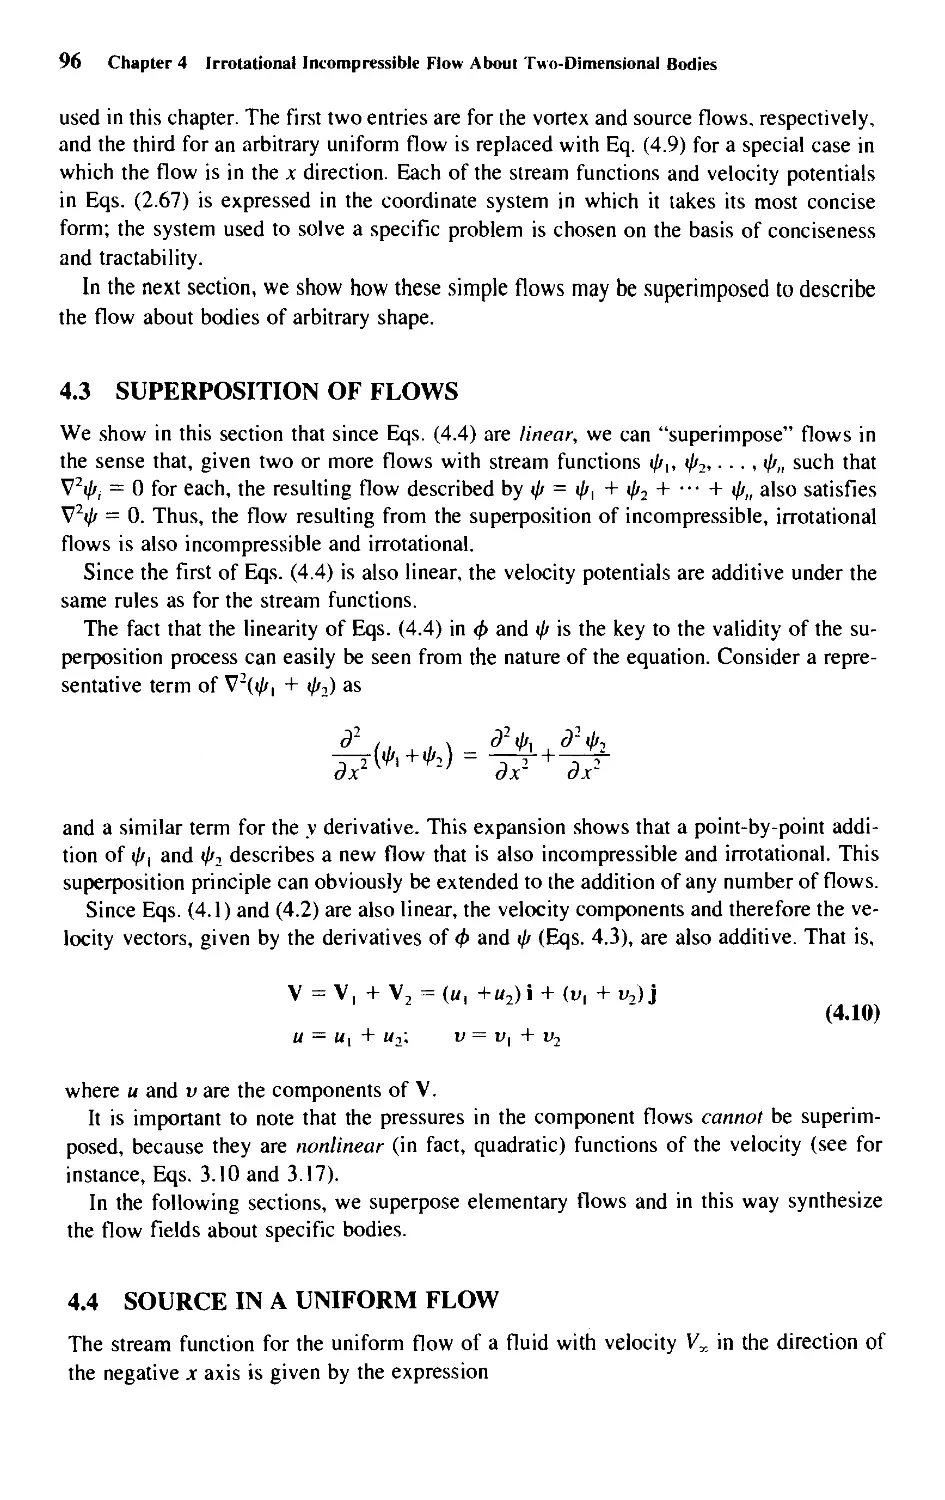 4.3 - Superposition of Flows
4.4 - Source in a Uniform Flow